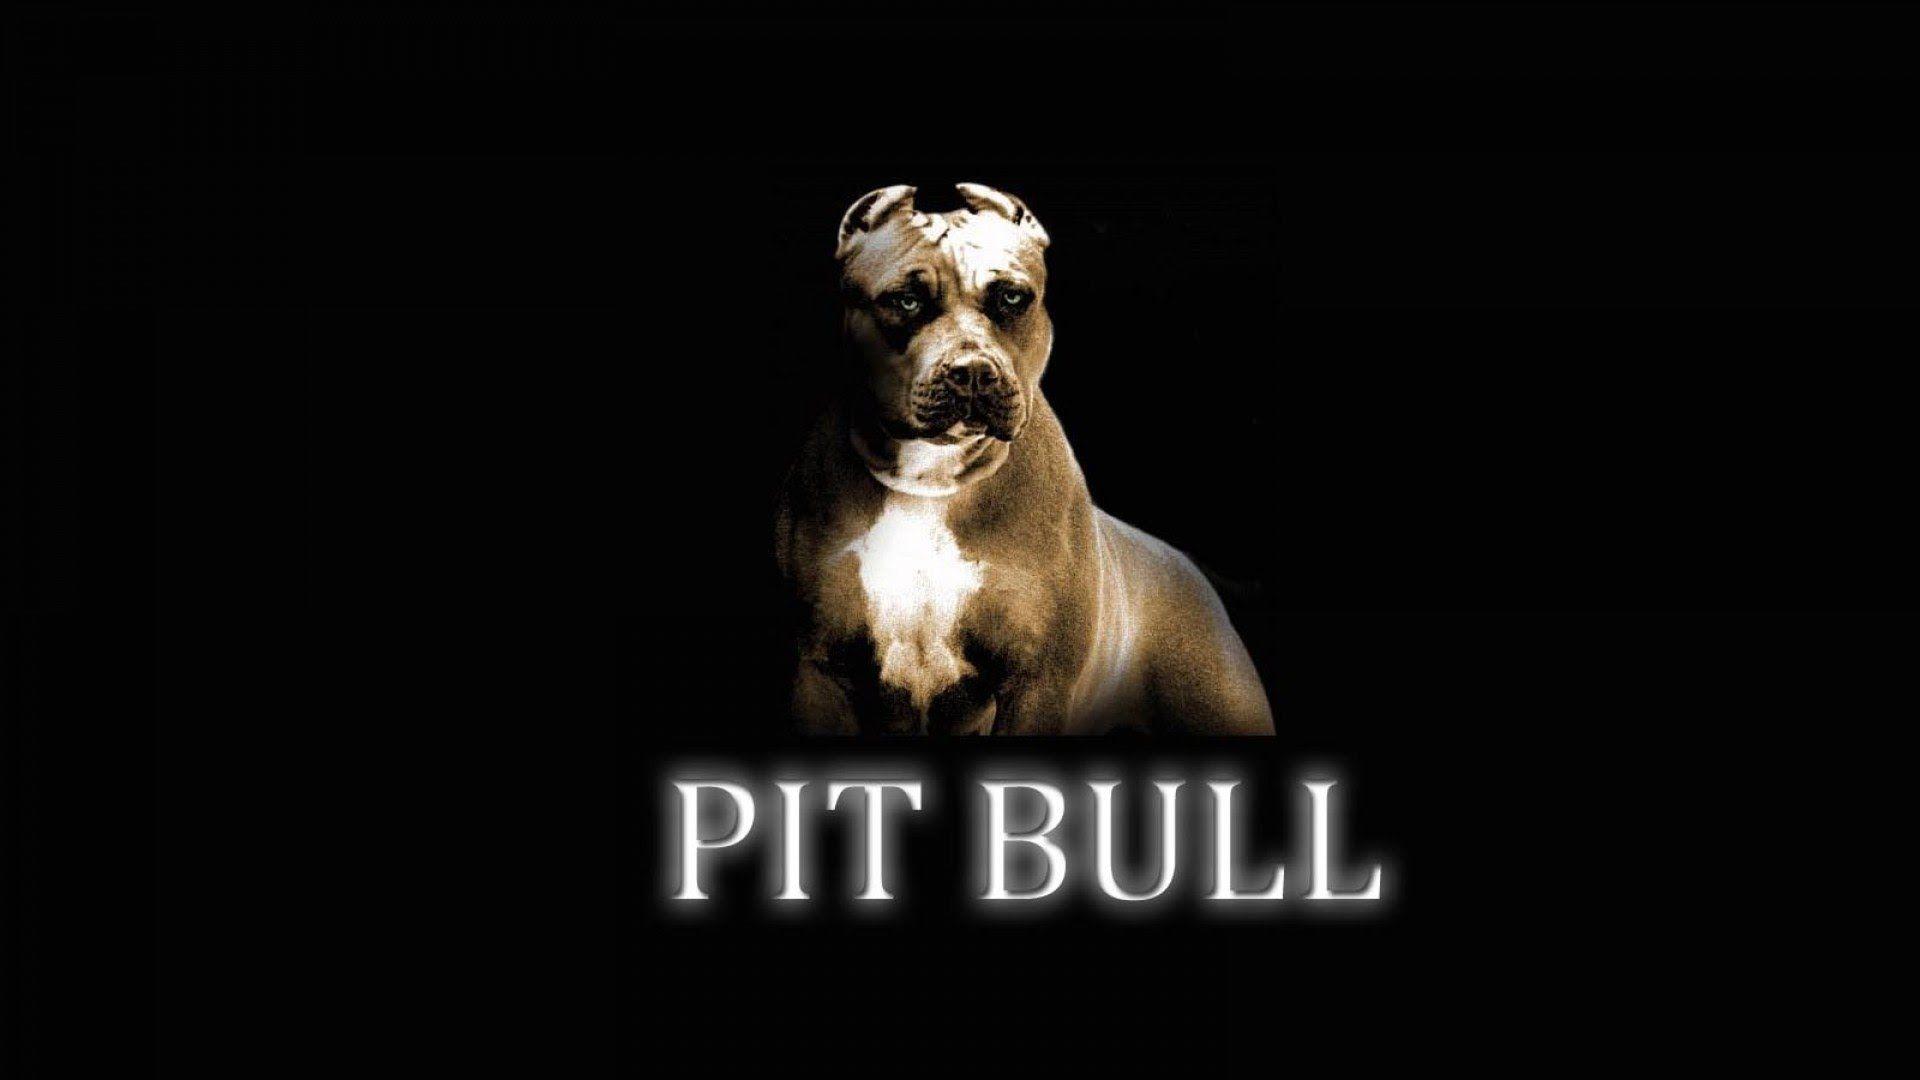 Pitbull At Dog Show 13 12 2015 Phul, Bathinda